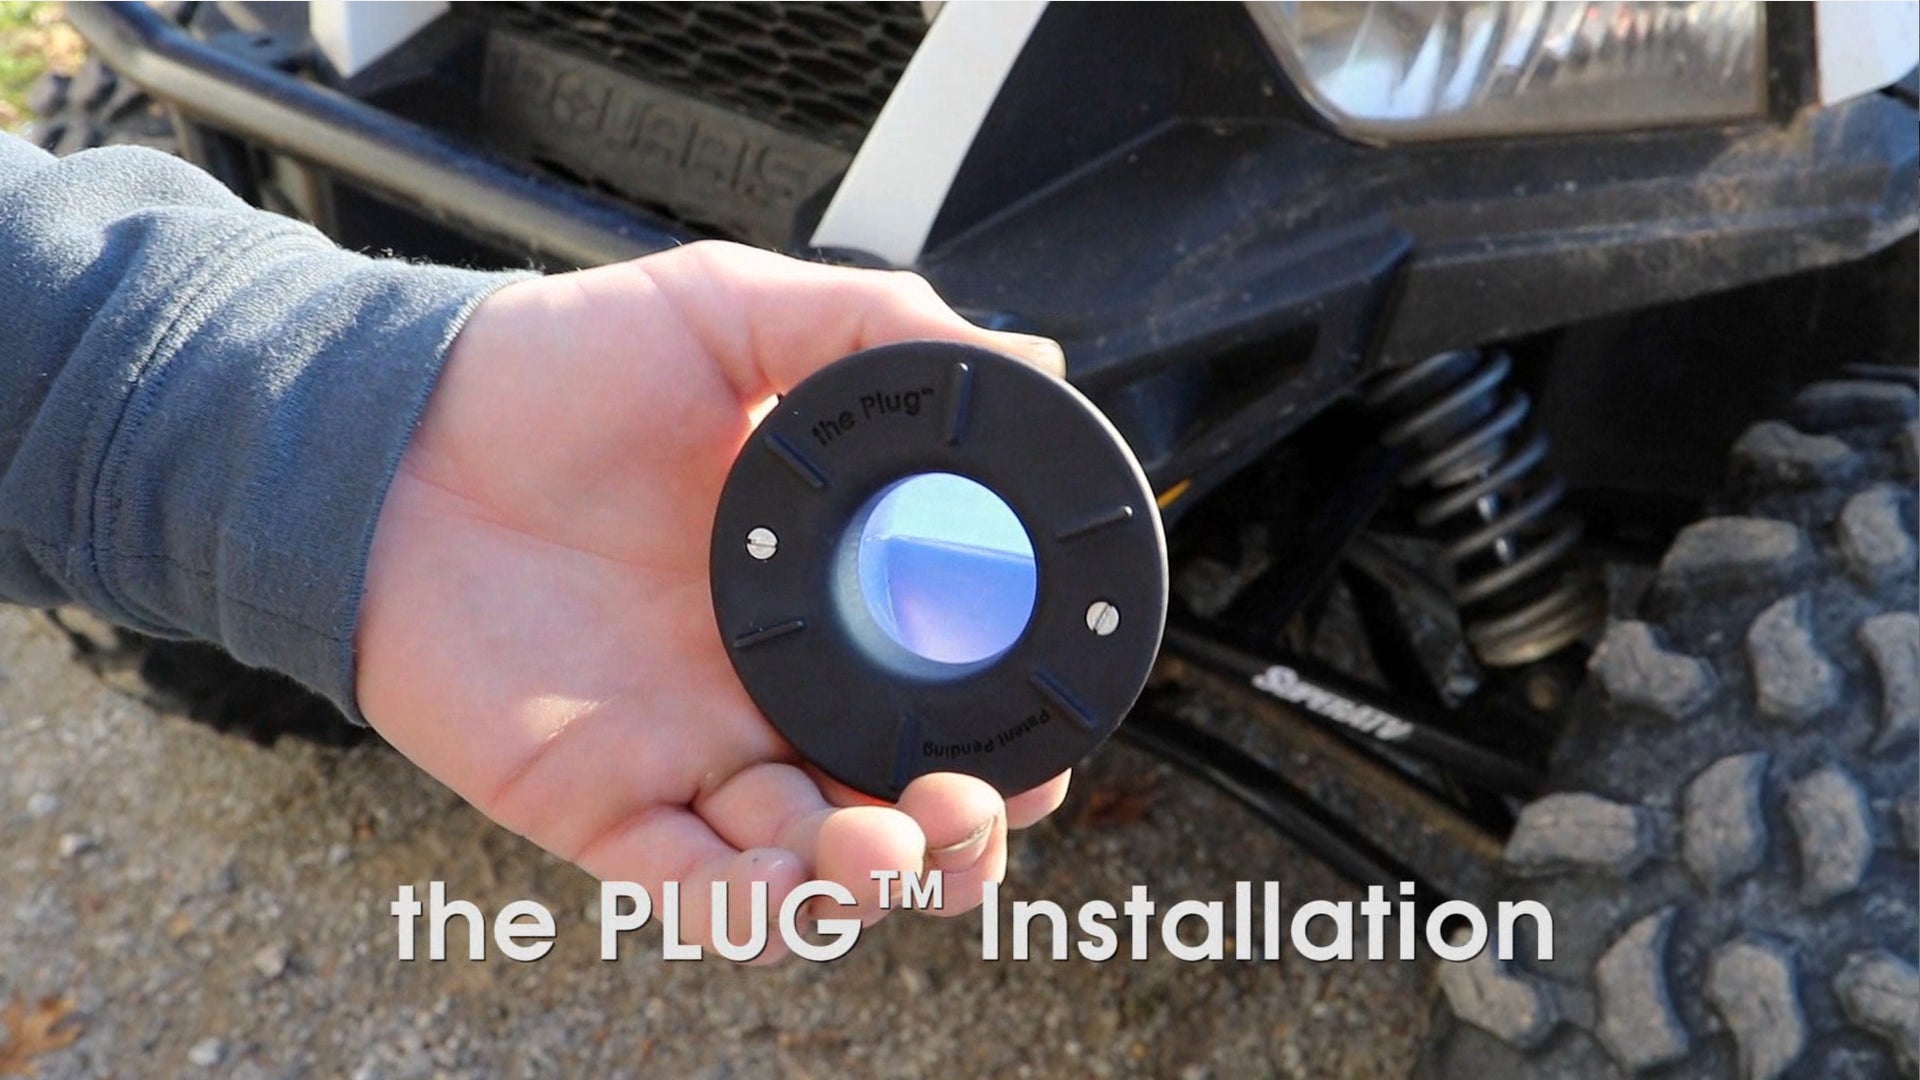 Load video: the PLUG™ Installation